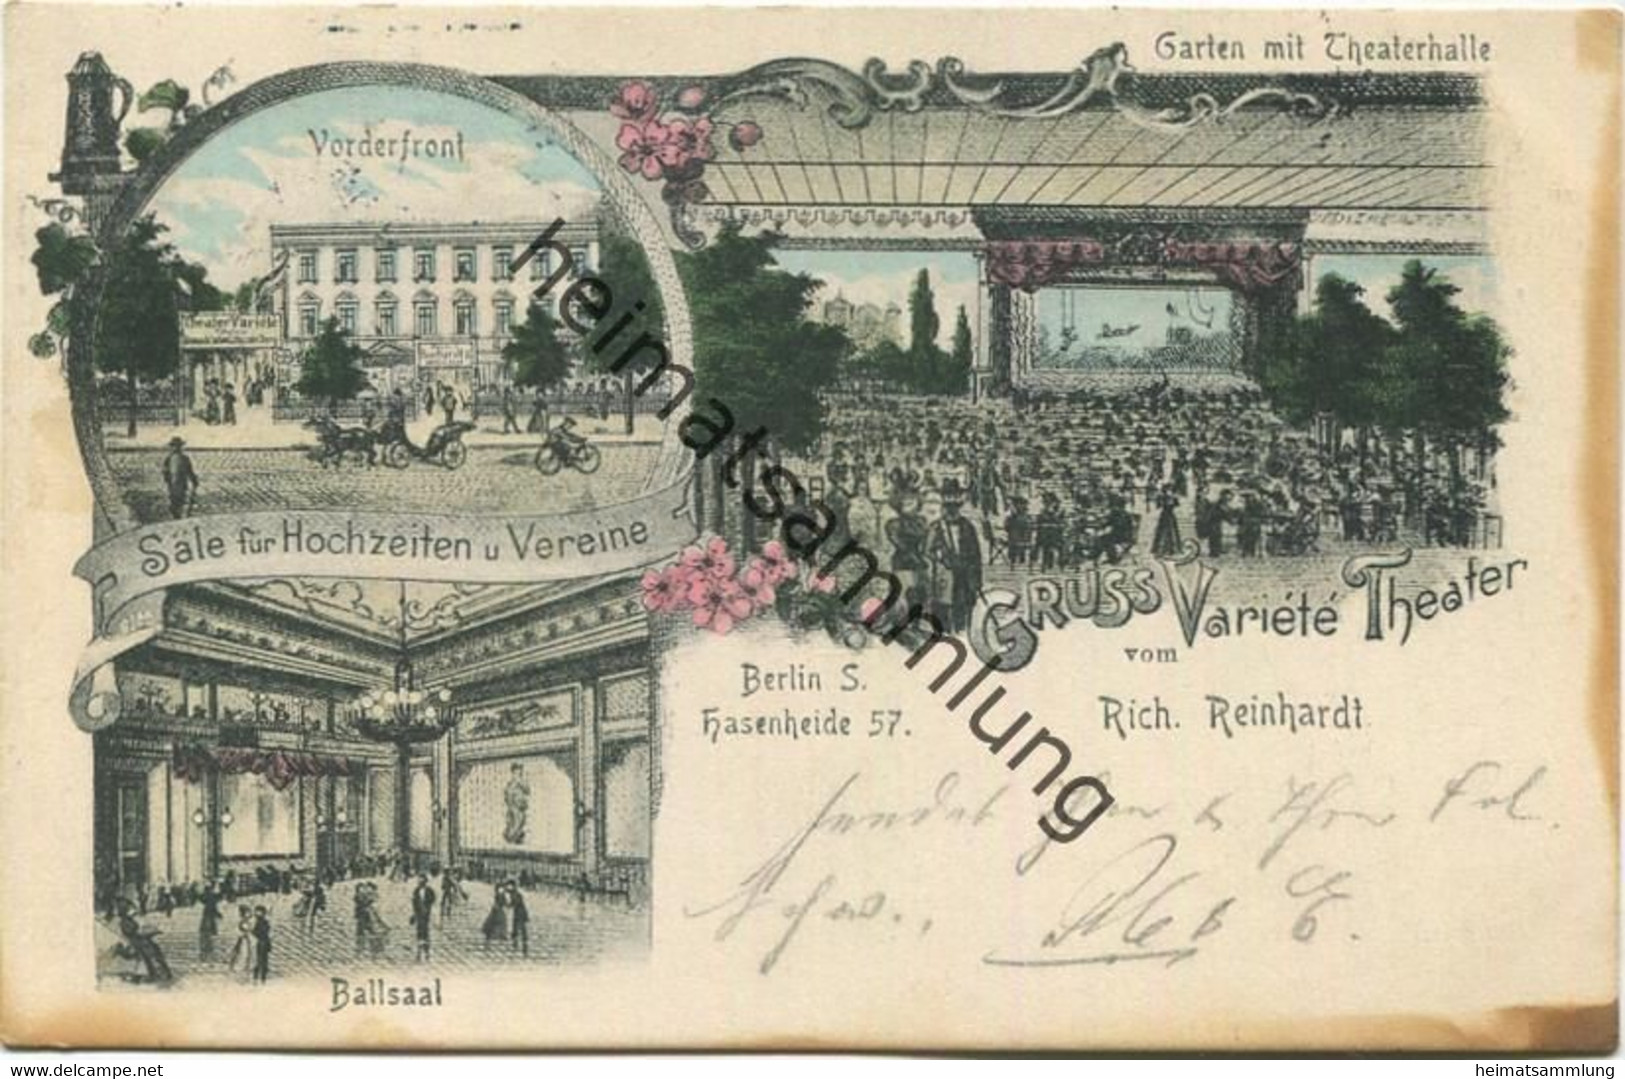 Berlin-Kreuzberg - Variete Theater - Hasenheide 57 - Besitzer Rich. Reinhardt - Verlag C. Aug. Droesse Berlin Gel. 1910 - Kreuzberg